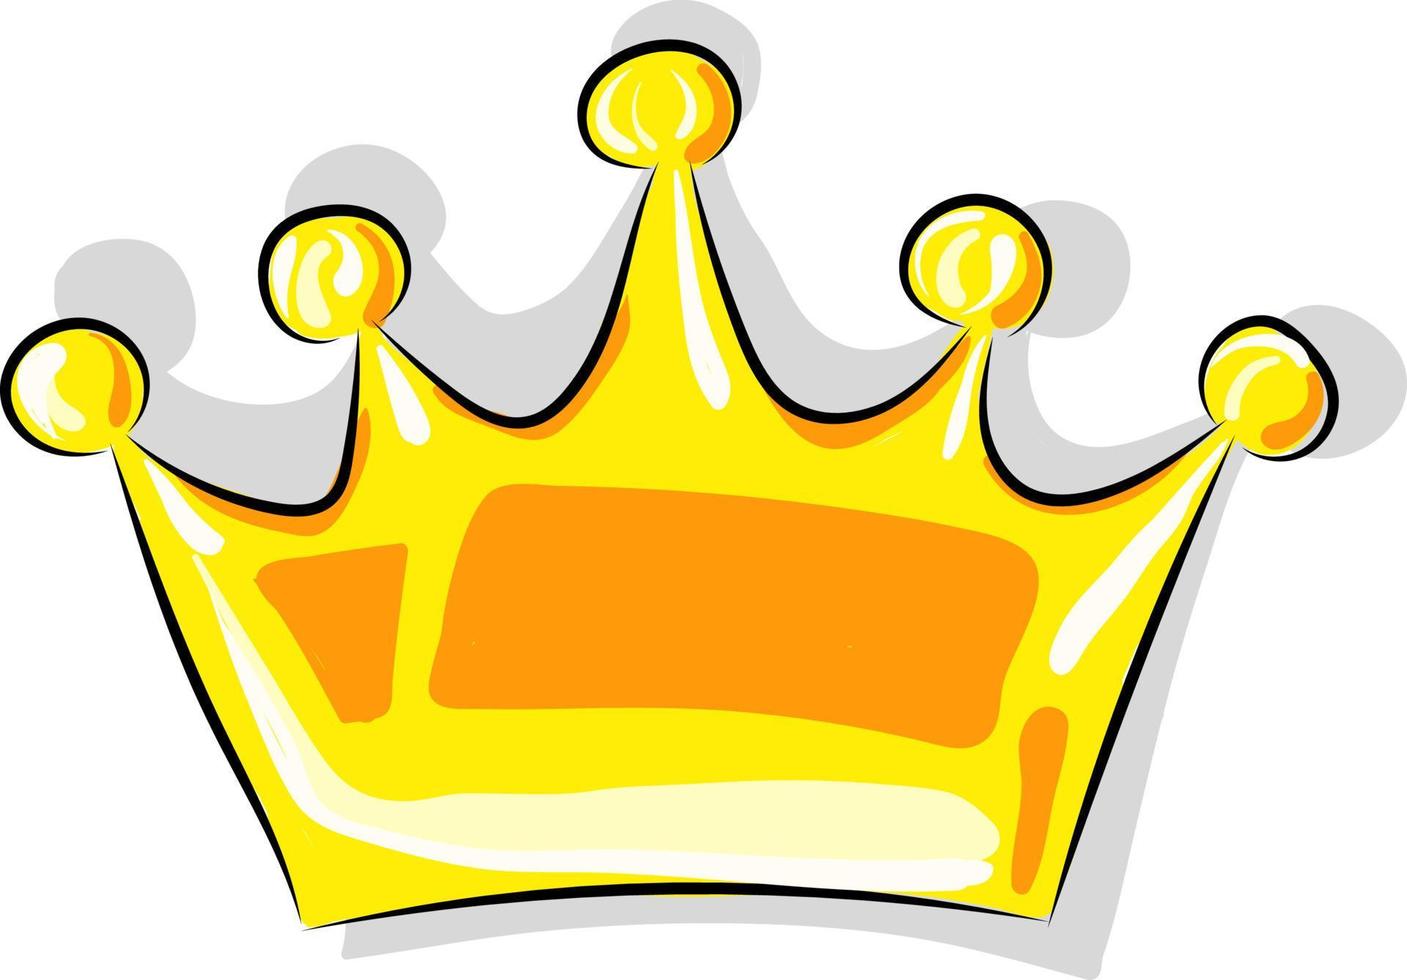 Golden crown, illustration, vector on white background.